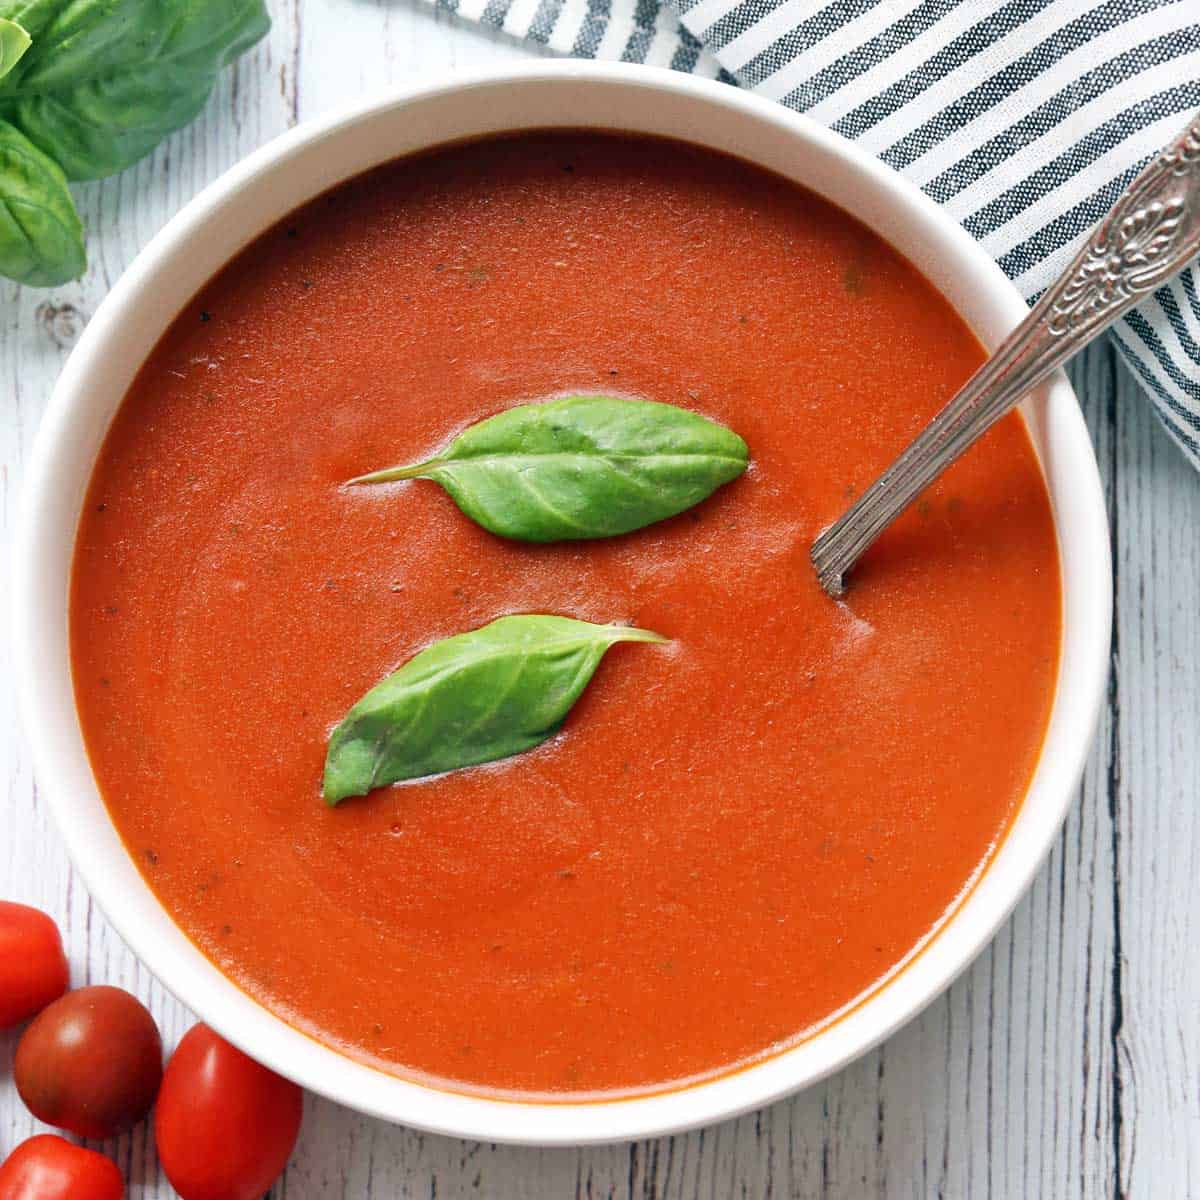 https://healthyrecipesblogs.com/wp-content/uploads/2022/05/tomato-soup-featured-2022.jpg